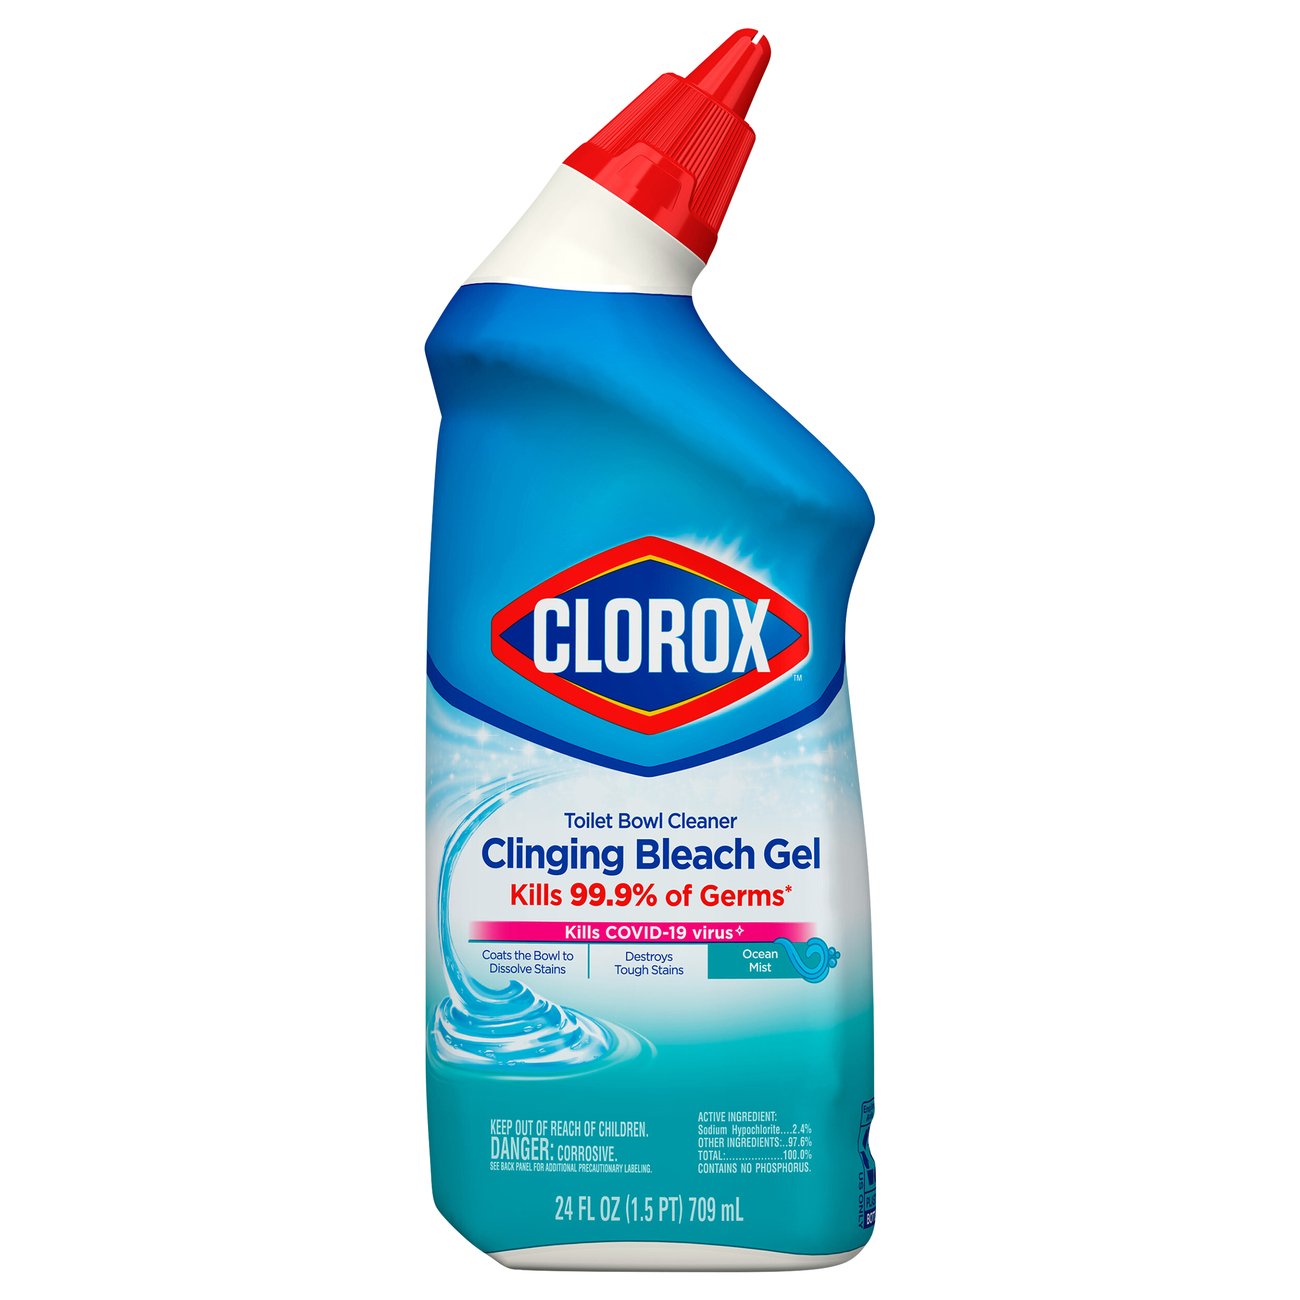 Clorox Clinging Bleach Gel Cool Wave Toilet Bowl Cleaner - Shop 